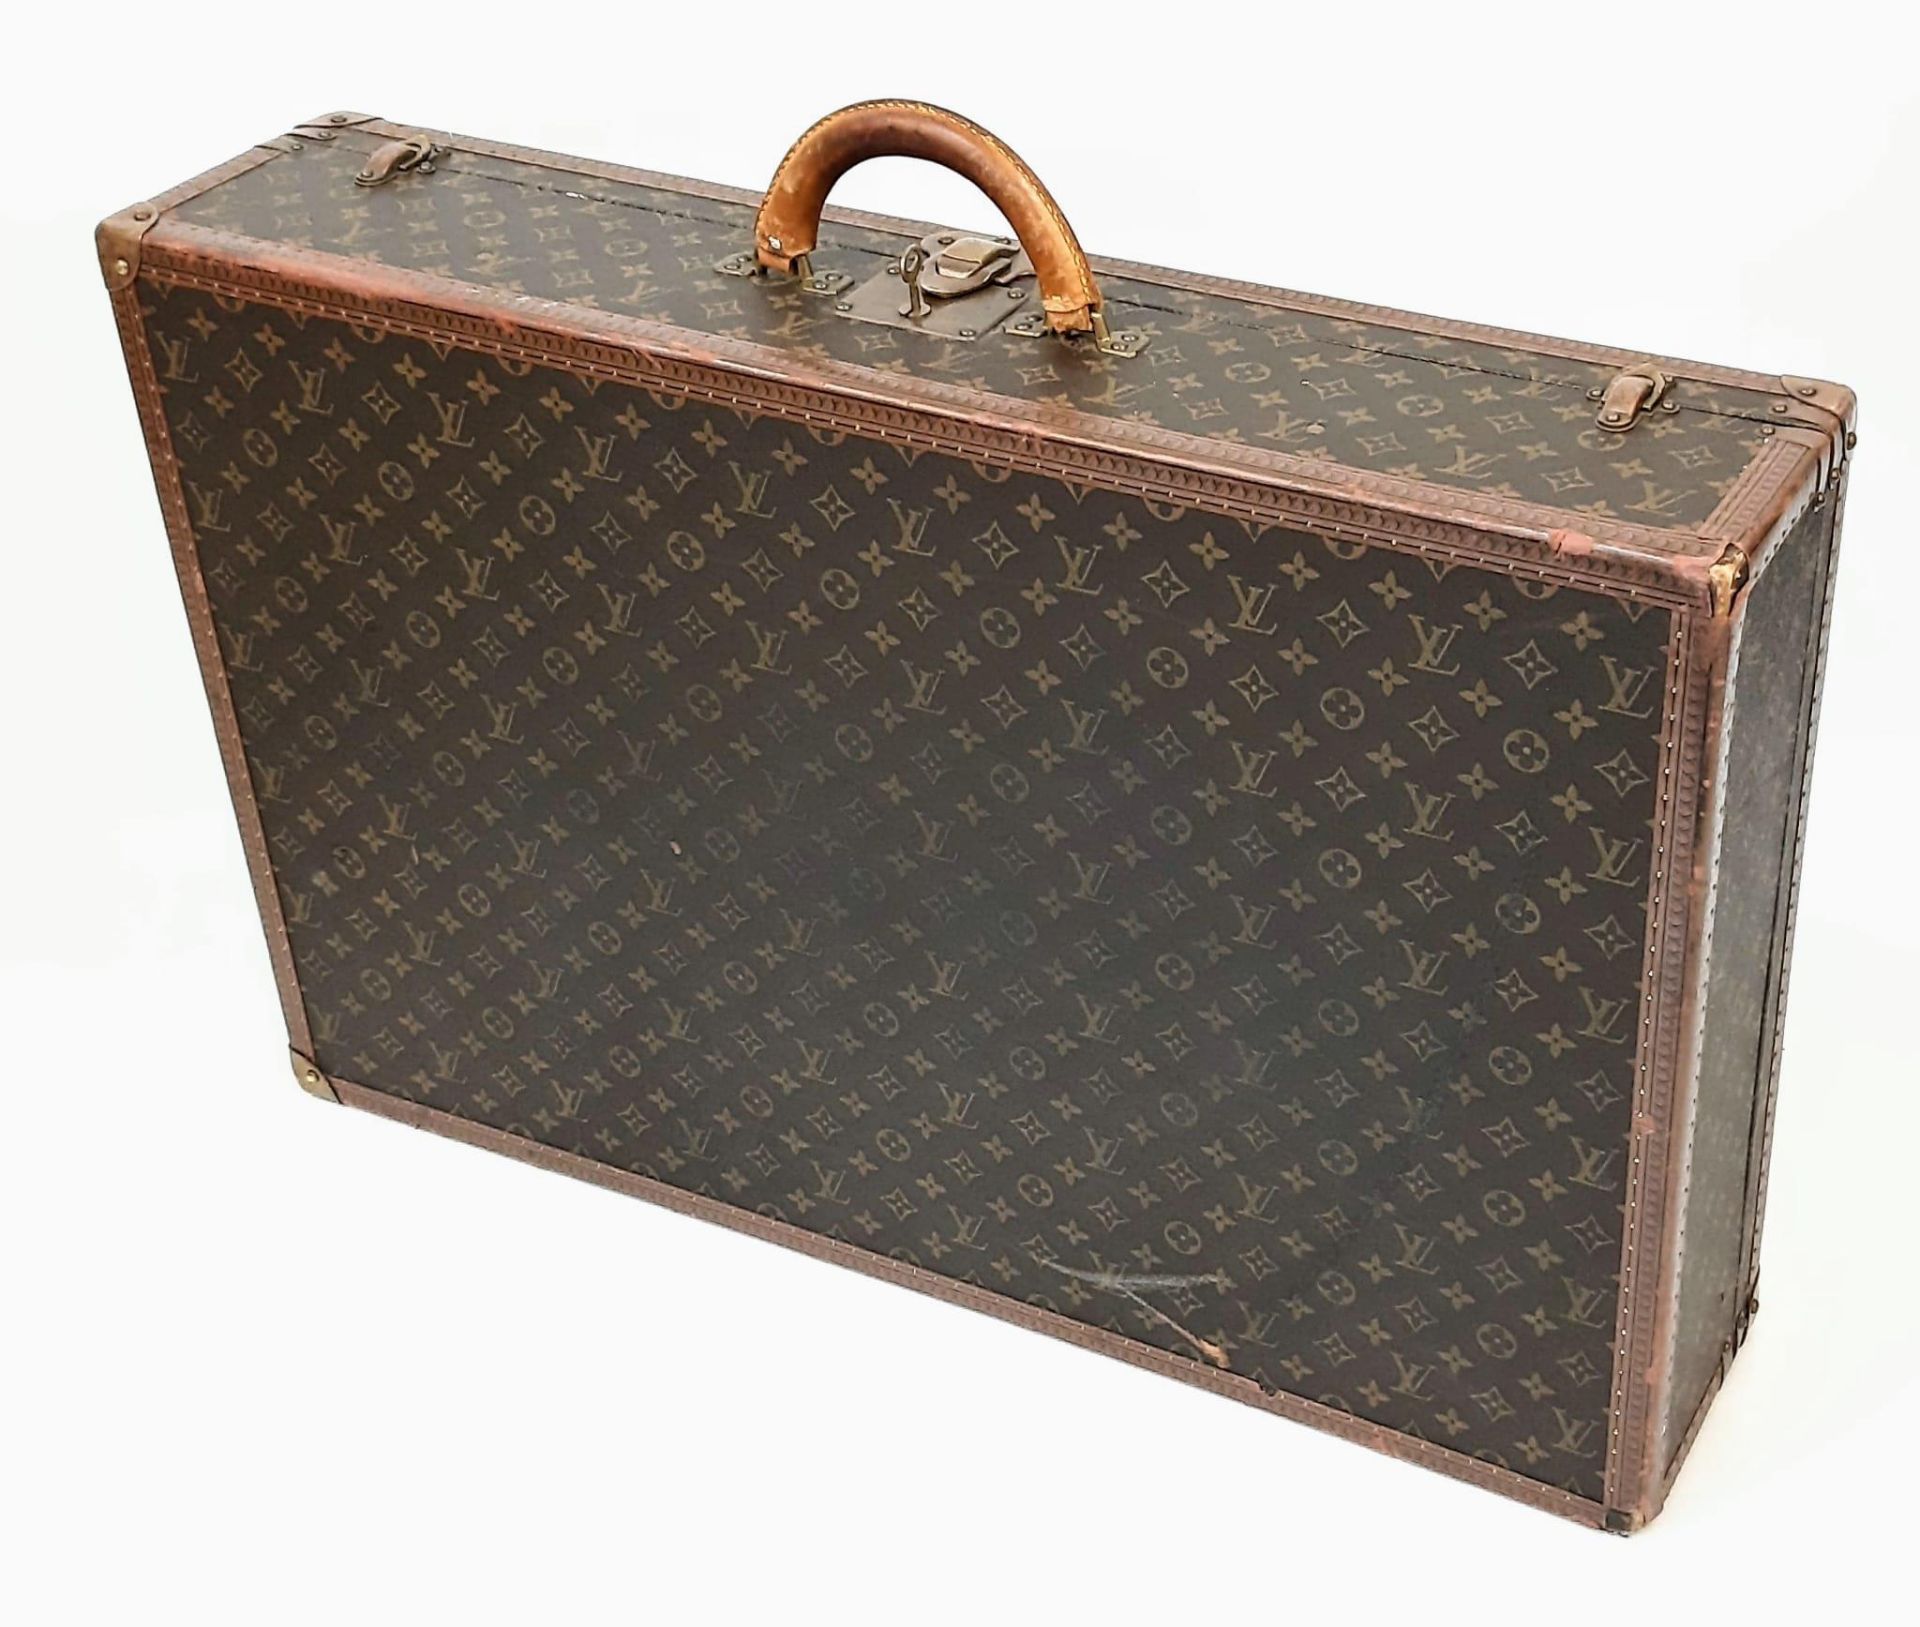 A Vintage Louis Vuitton Bisten 80 Trunk. Famous Monogram Leather With Gold Tone Hardware. Size